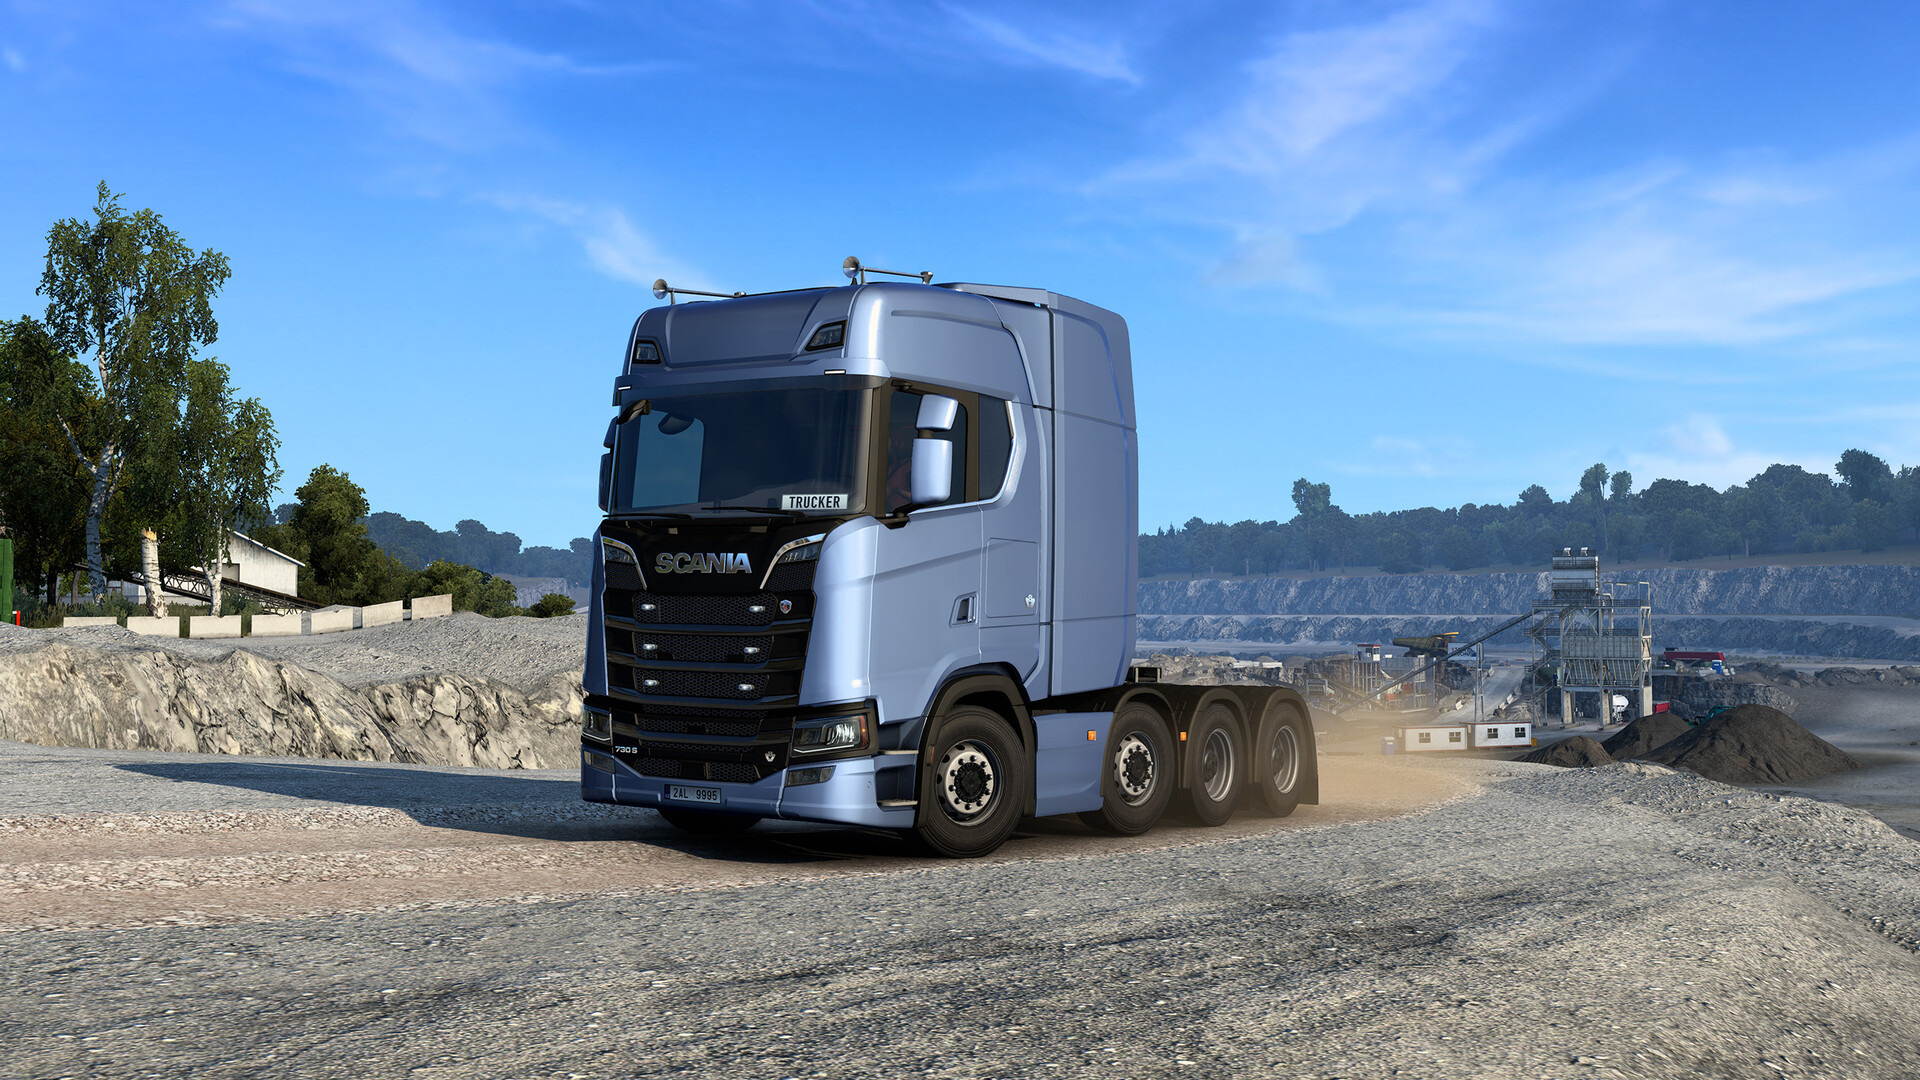 Euro Truck Simulator 2 Screenshot 6